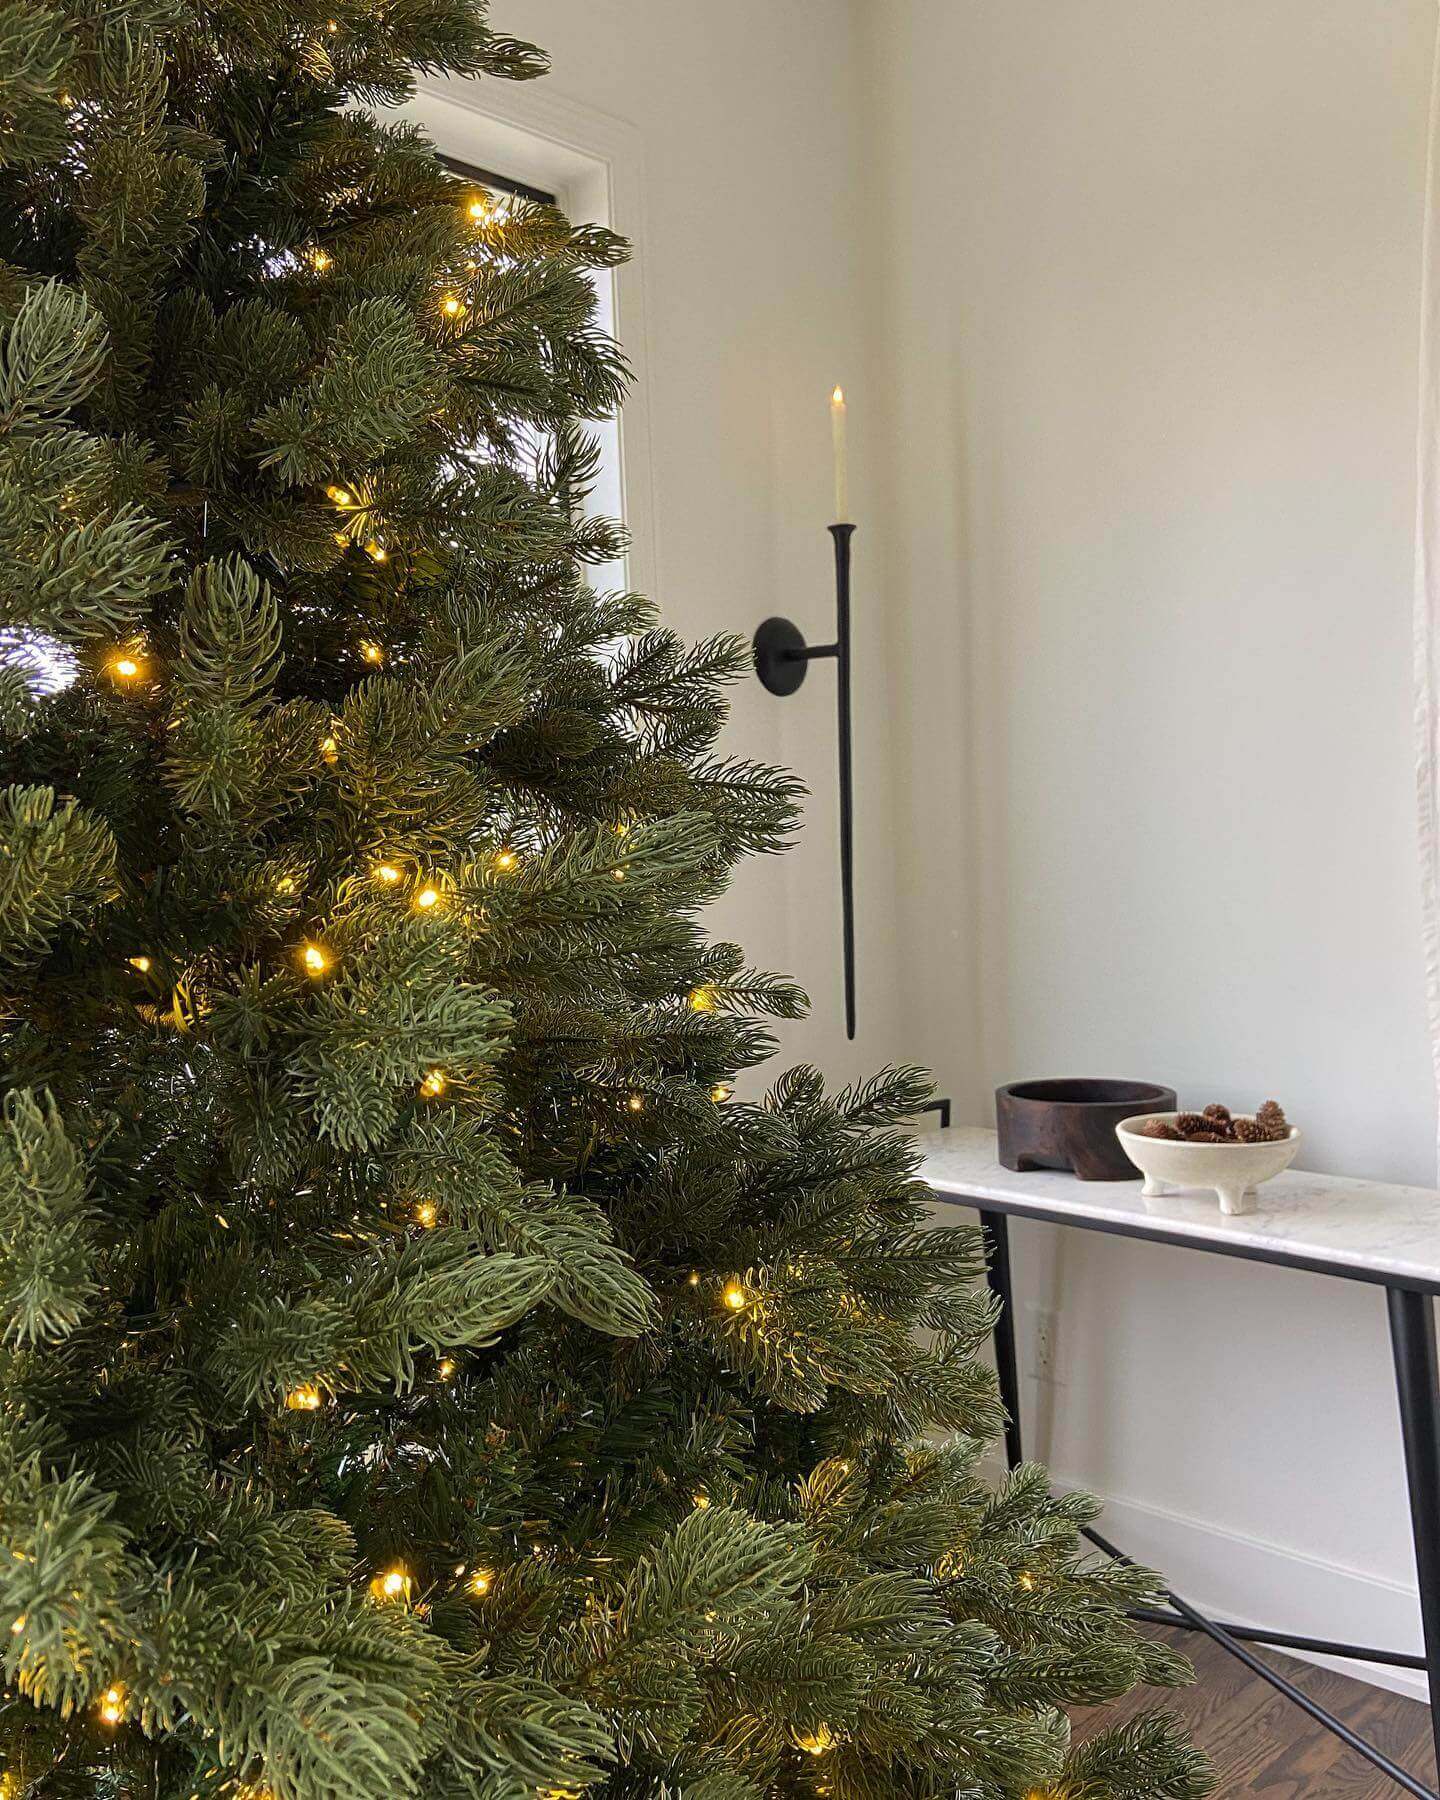 Prelit Artificial Christmas Tree with Remote Control Pencil RGB